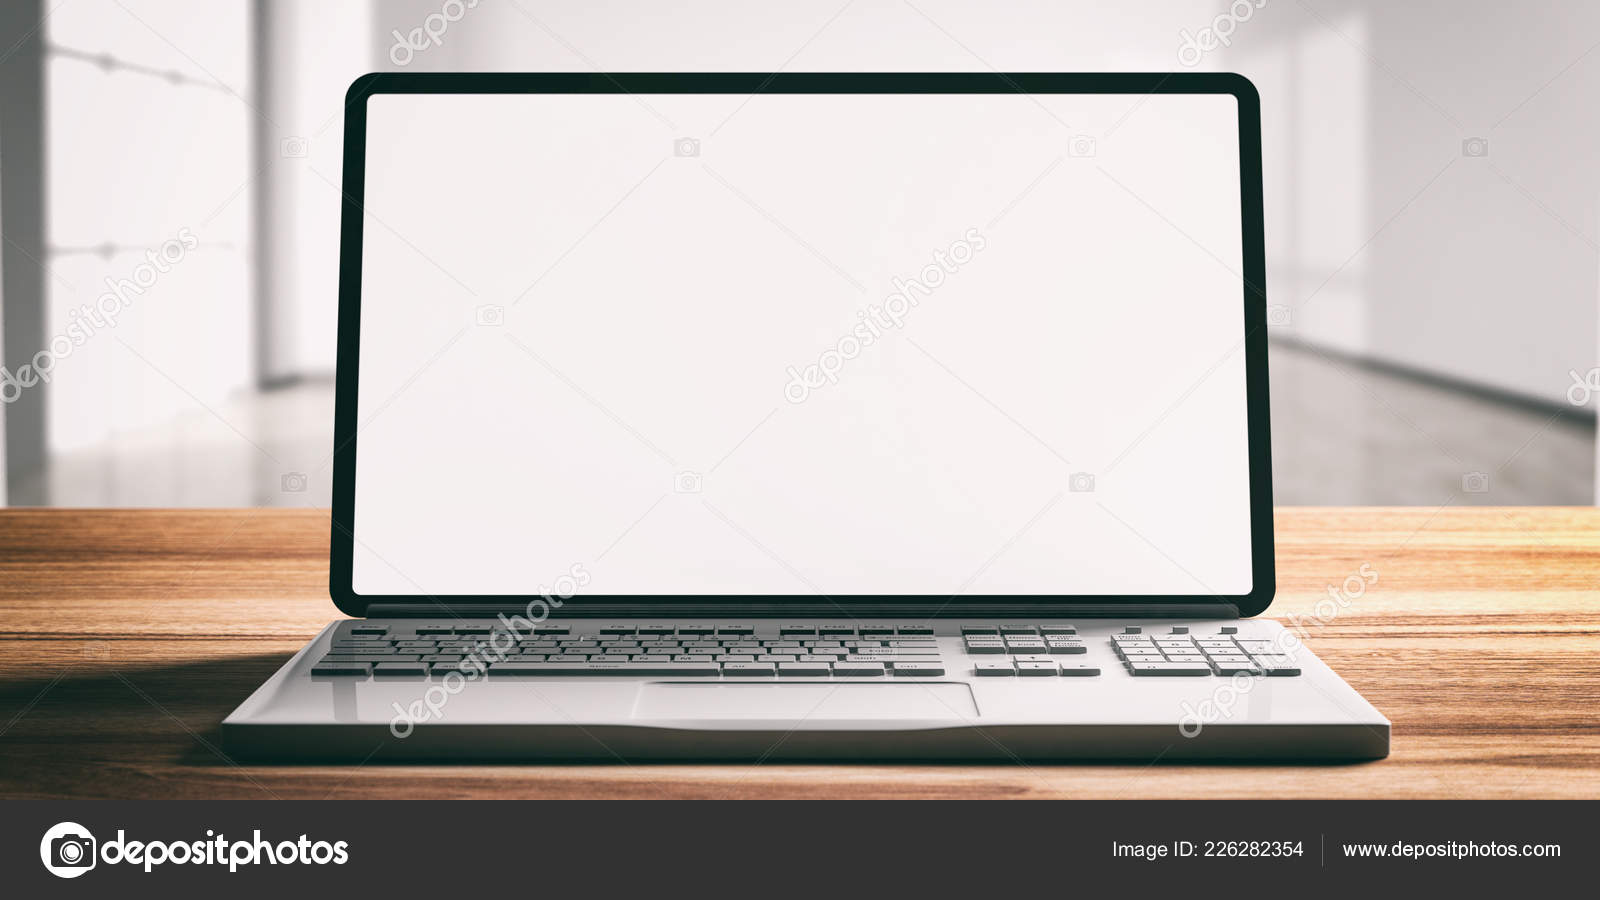 Puter laptop blank screen wooden desk blur empty office background stock photo by gioiak